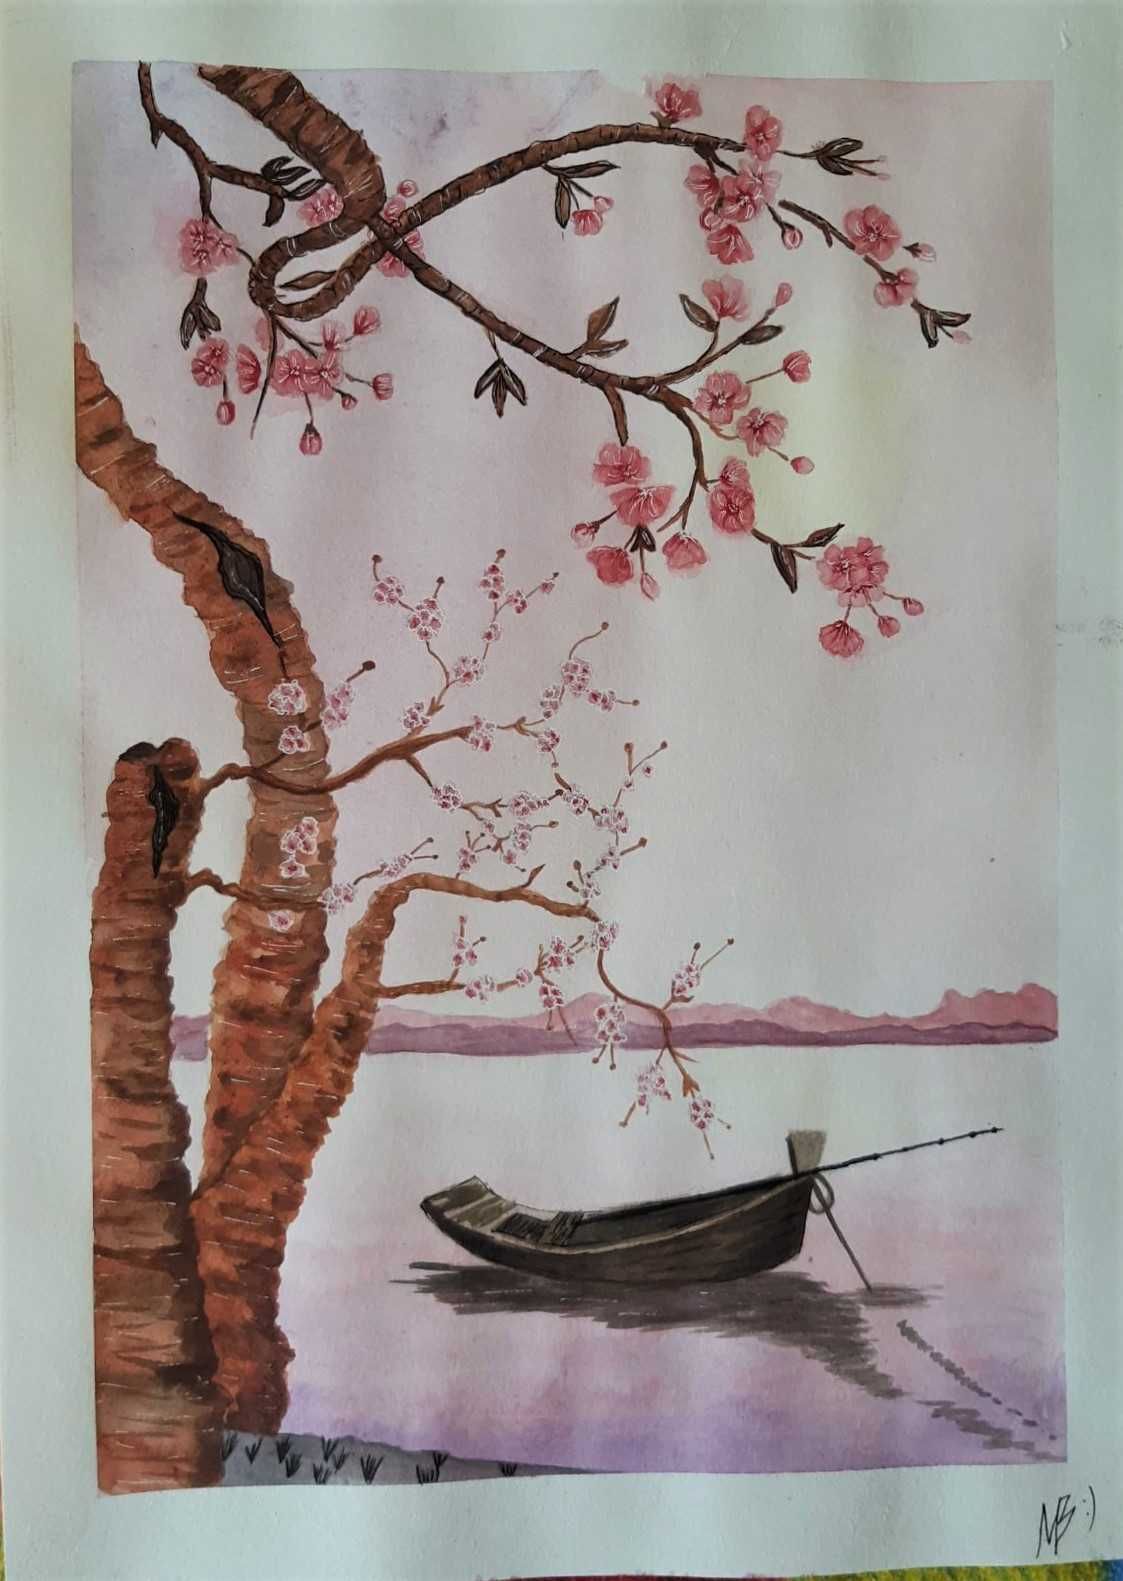 Картина акварелью "Сакура", формат А3